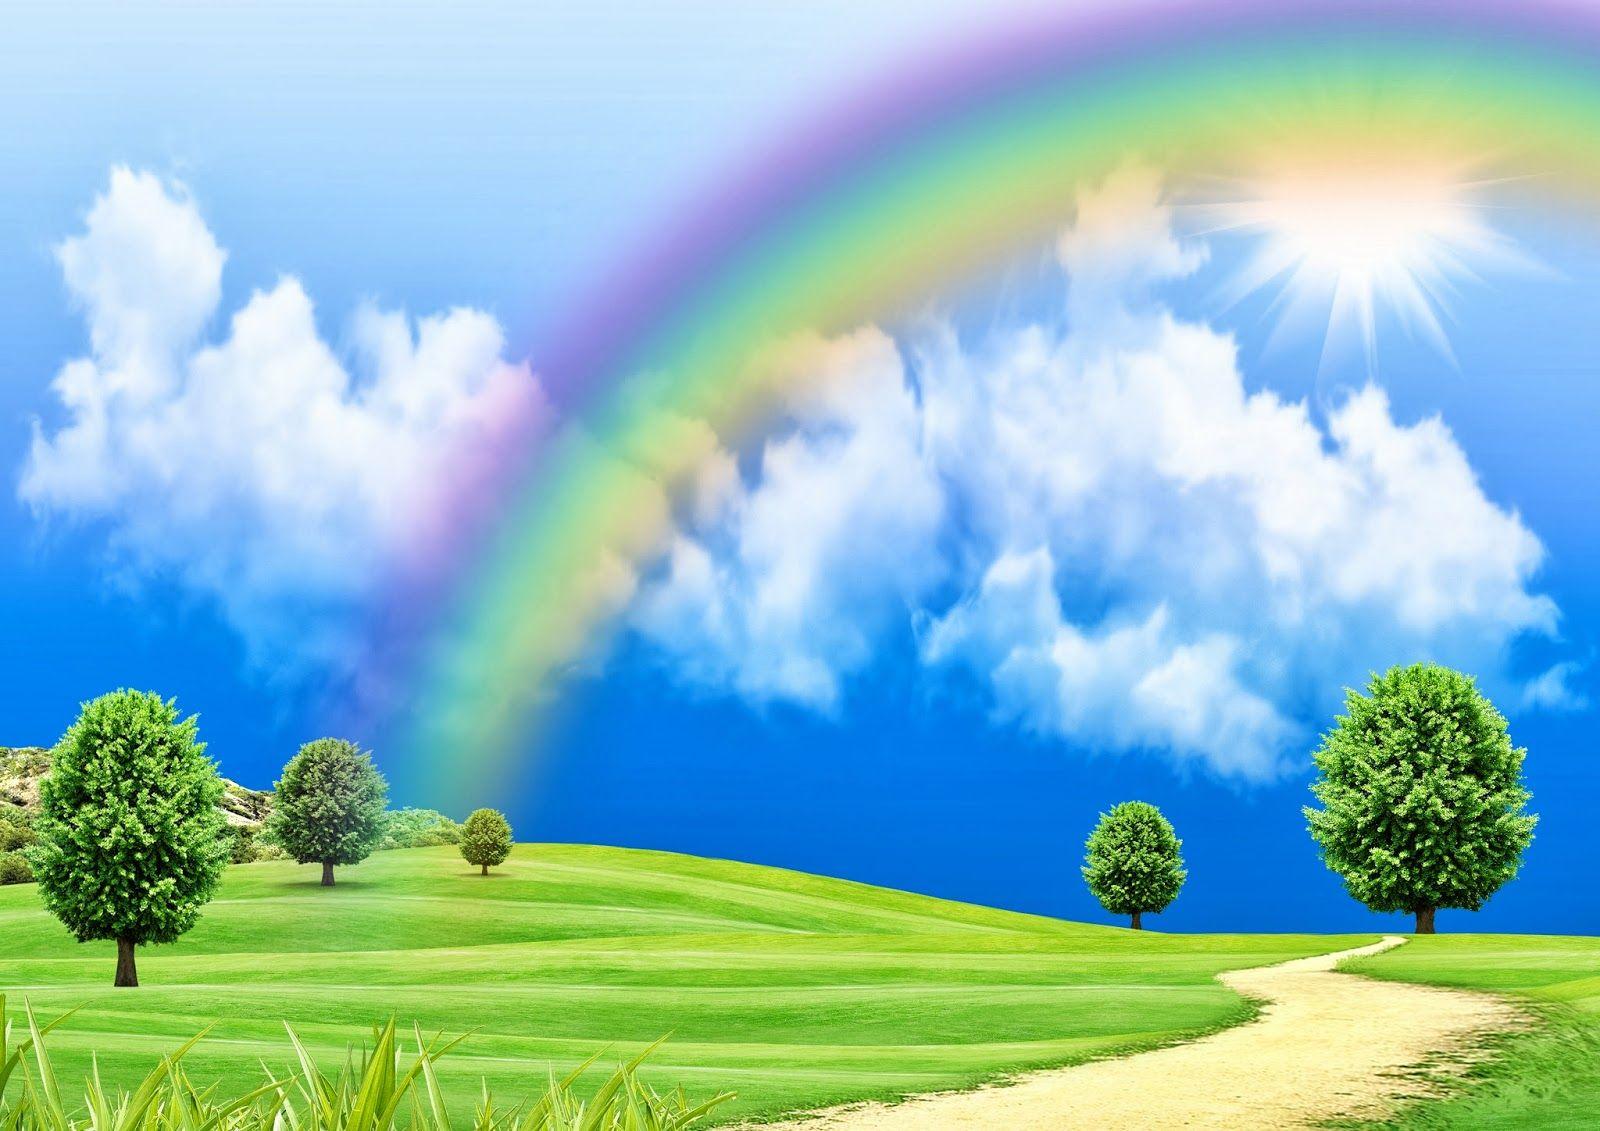 Rainbow Wallpaper Free Download HD Latest Amazing Beautiful Image